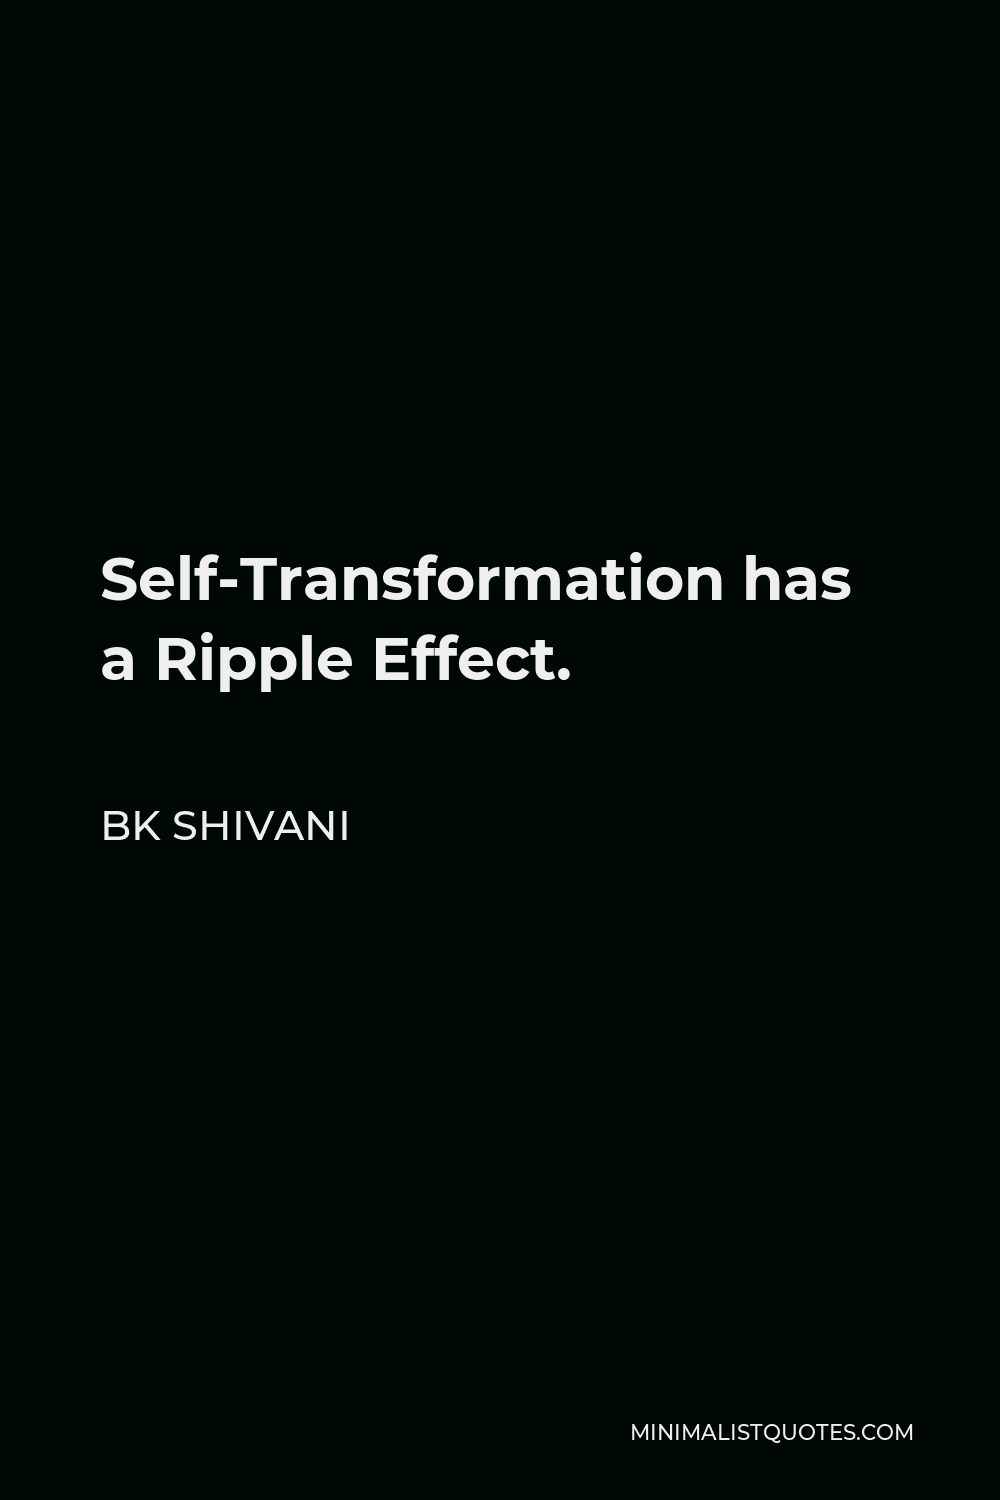 BK Shivani Quote - Self-Transformation has a Ripple Effect.